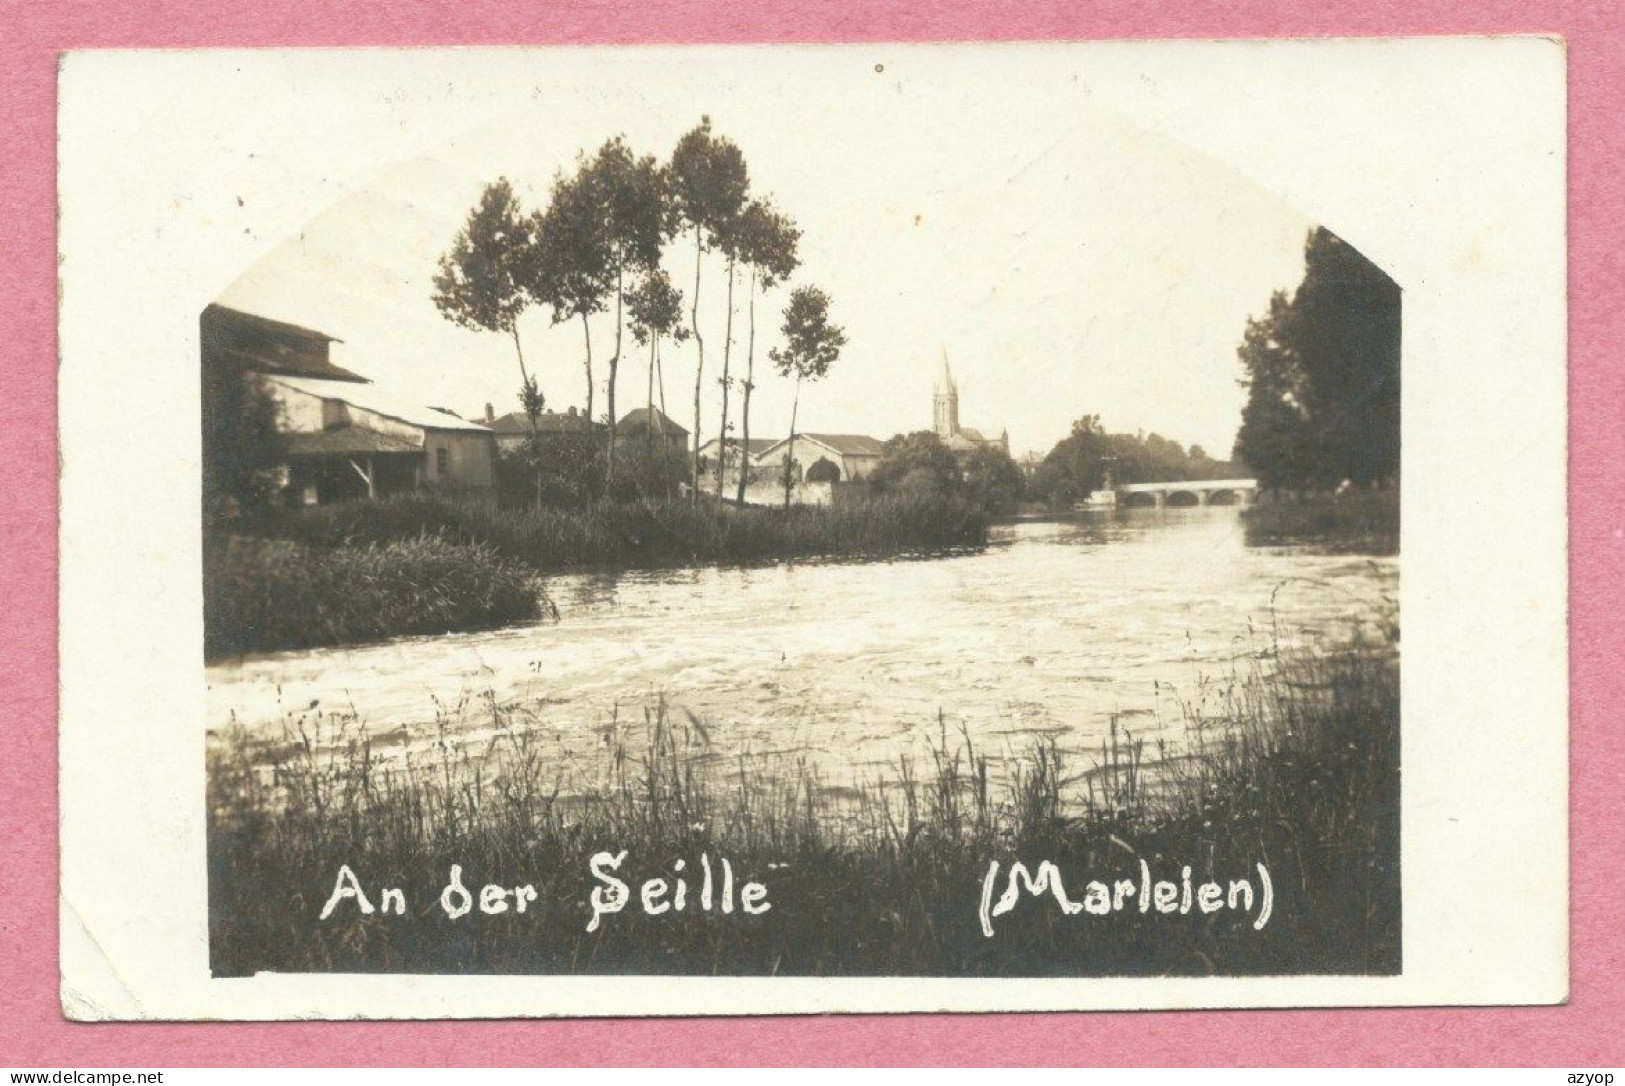 57 - MARLEIN An Der SEILLE - MARLY - Carte Photo - Vue Générale - Feldpost - Guerre 14/18 - Metz Campagne